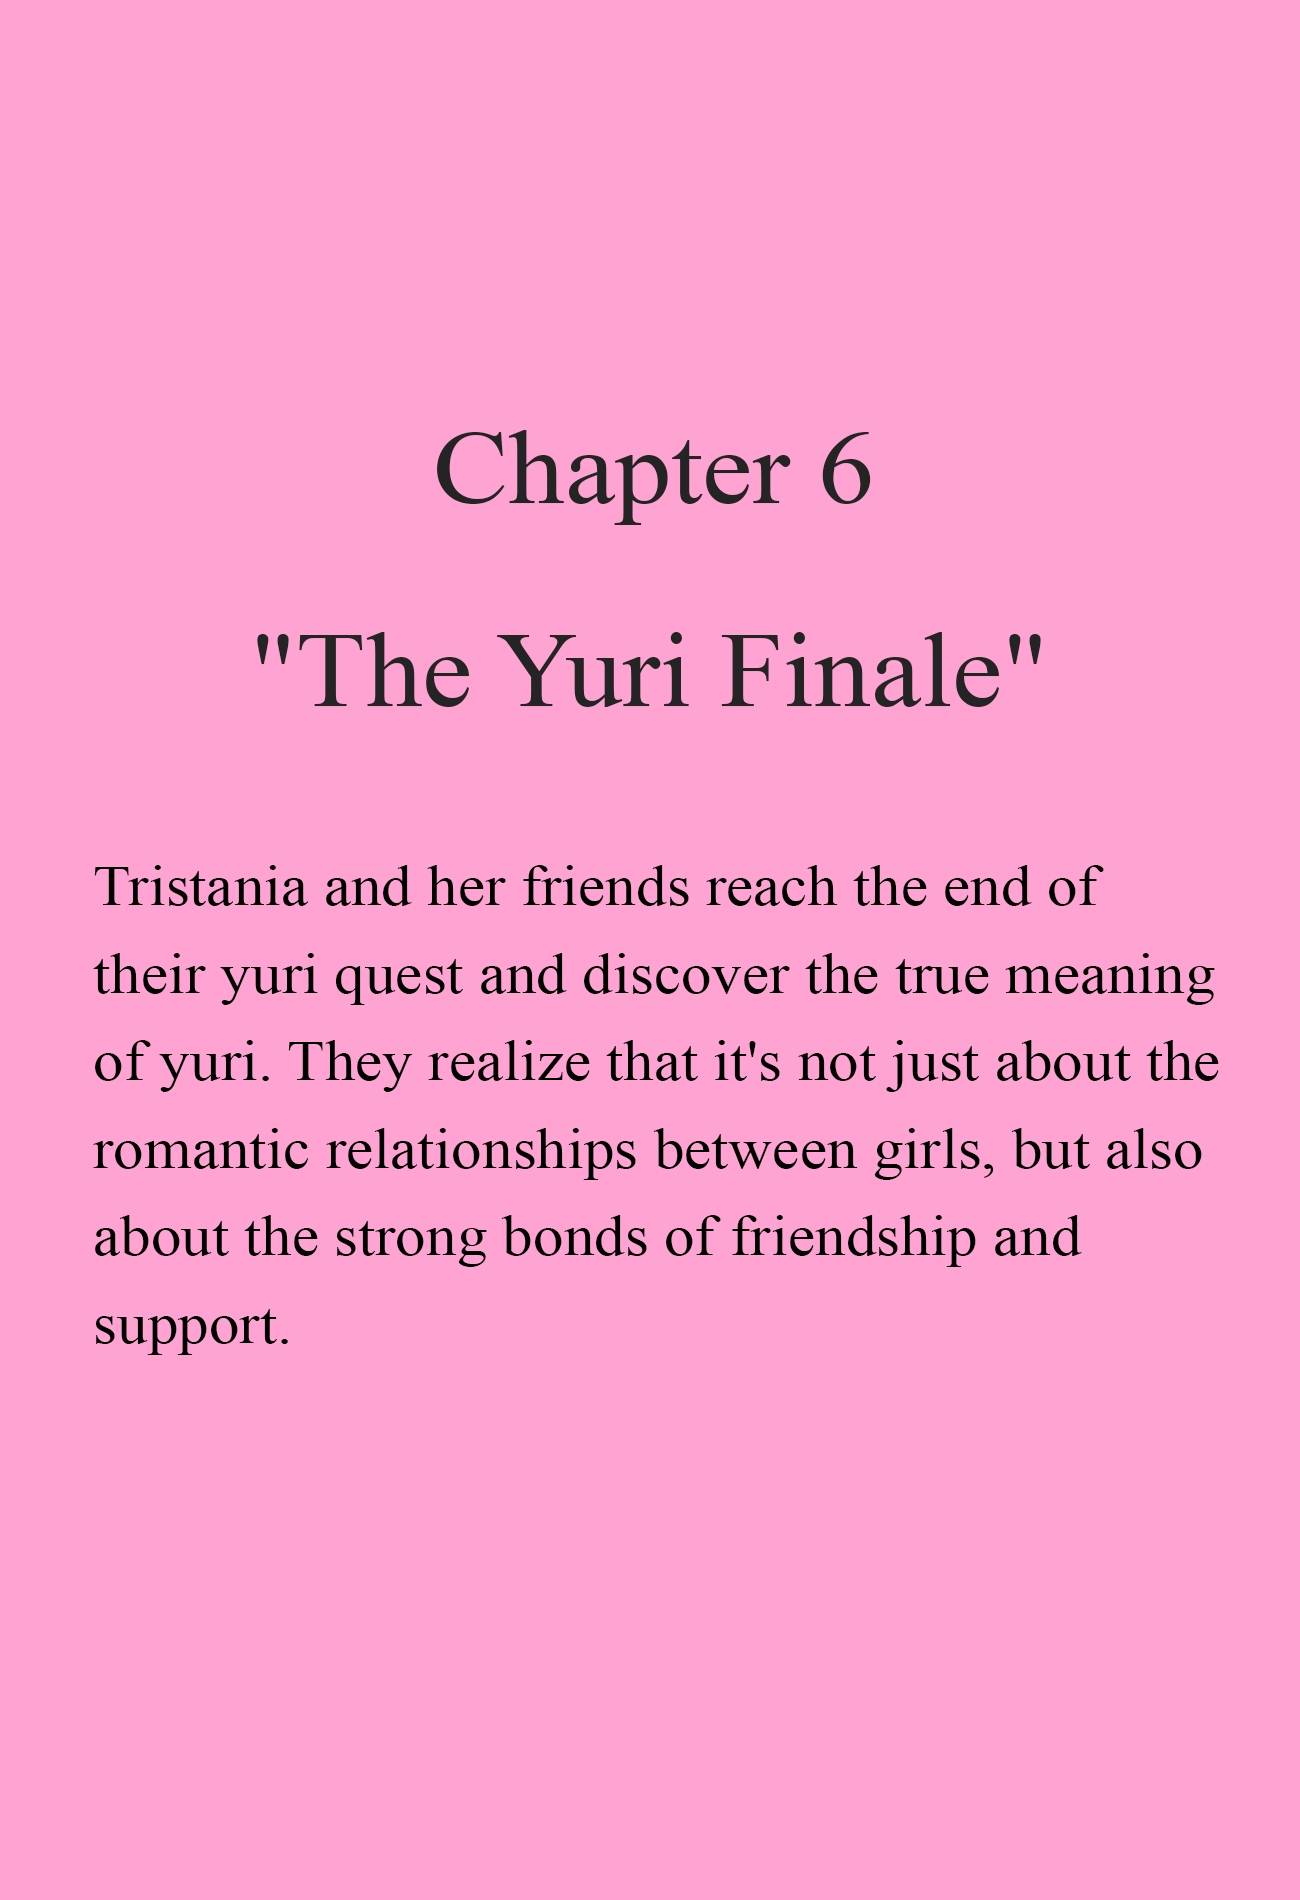 Tristan 9: Yuri Quest 6